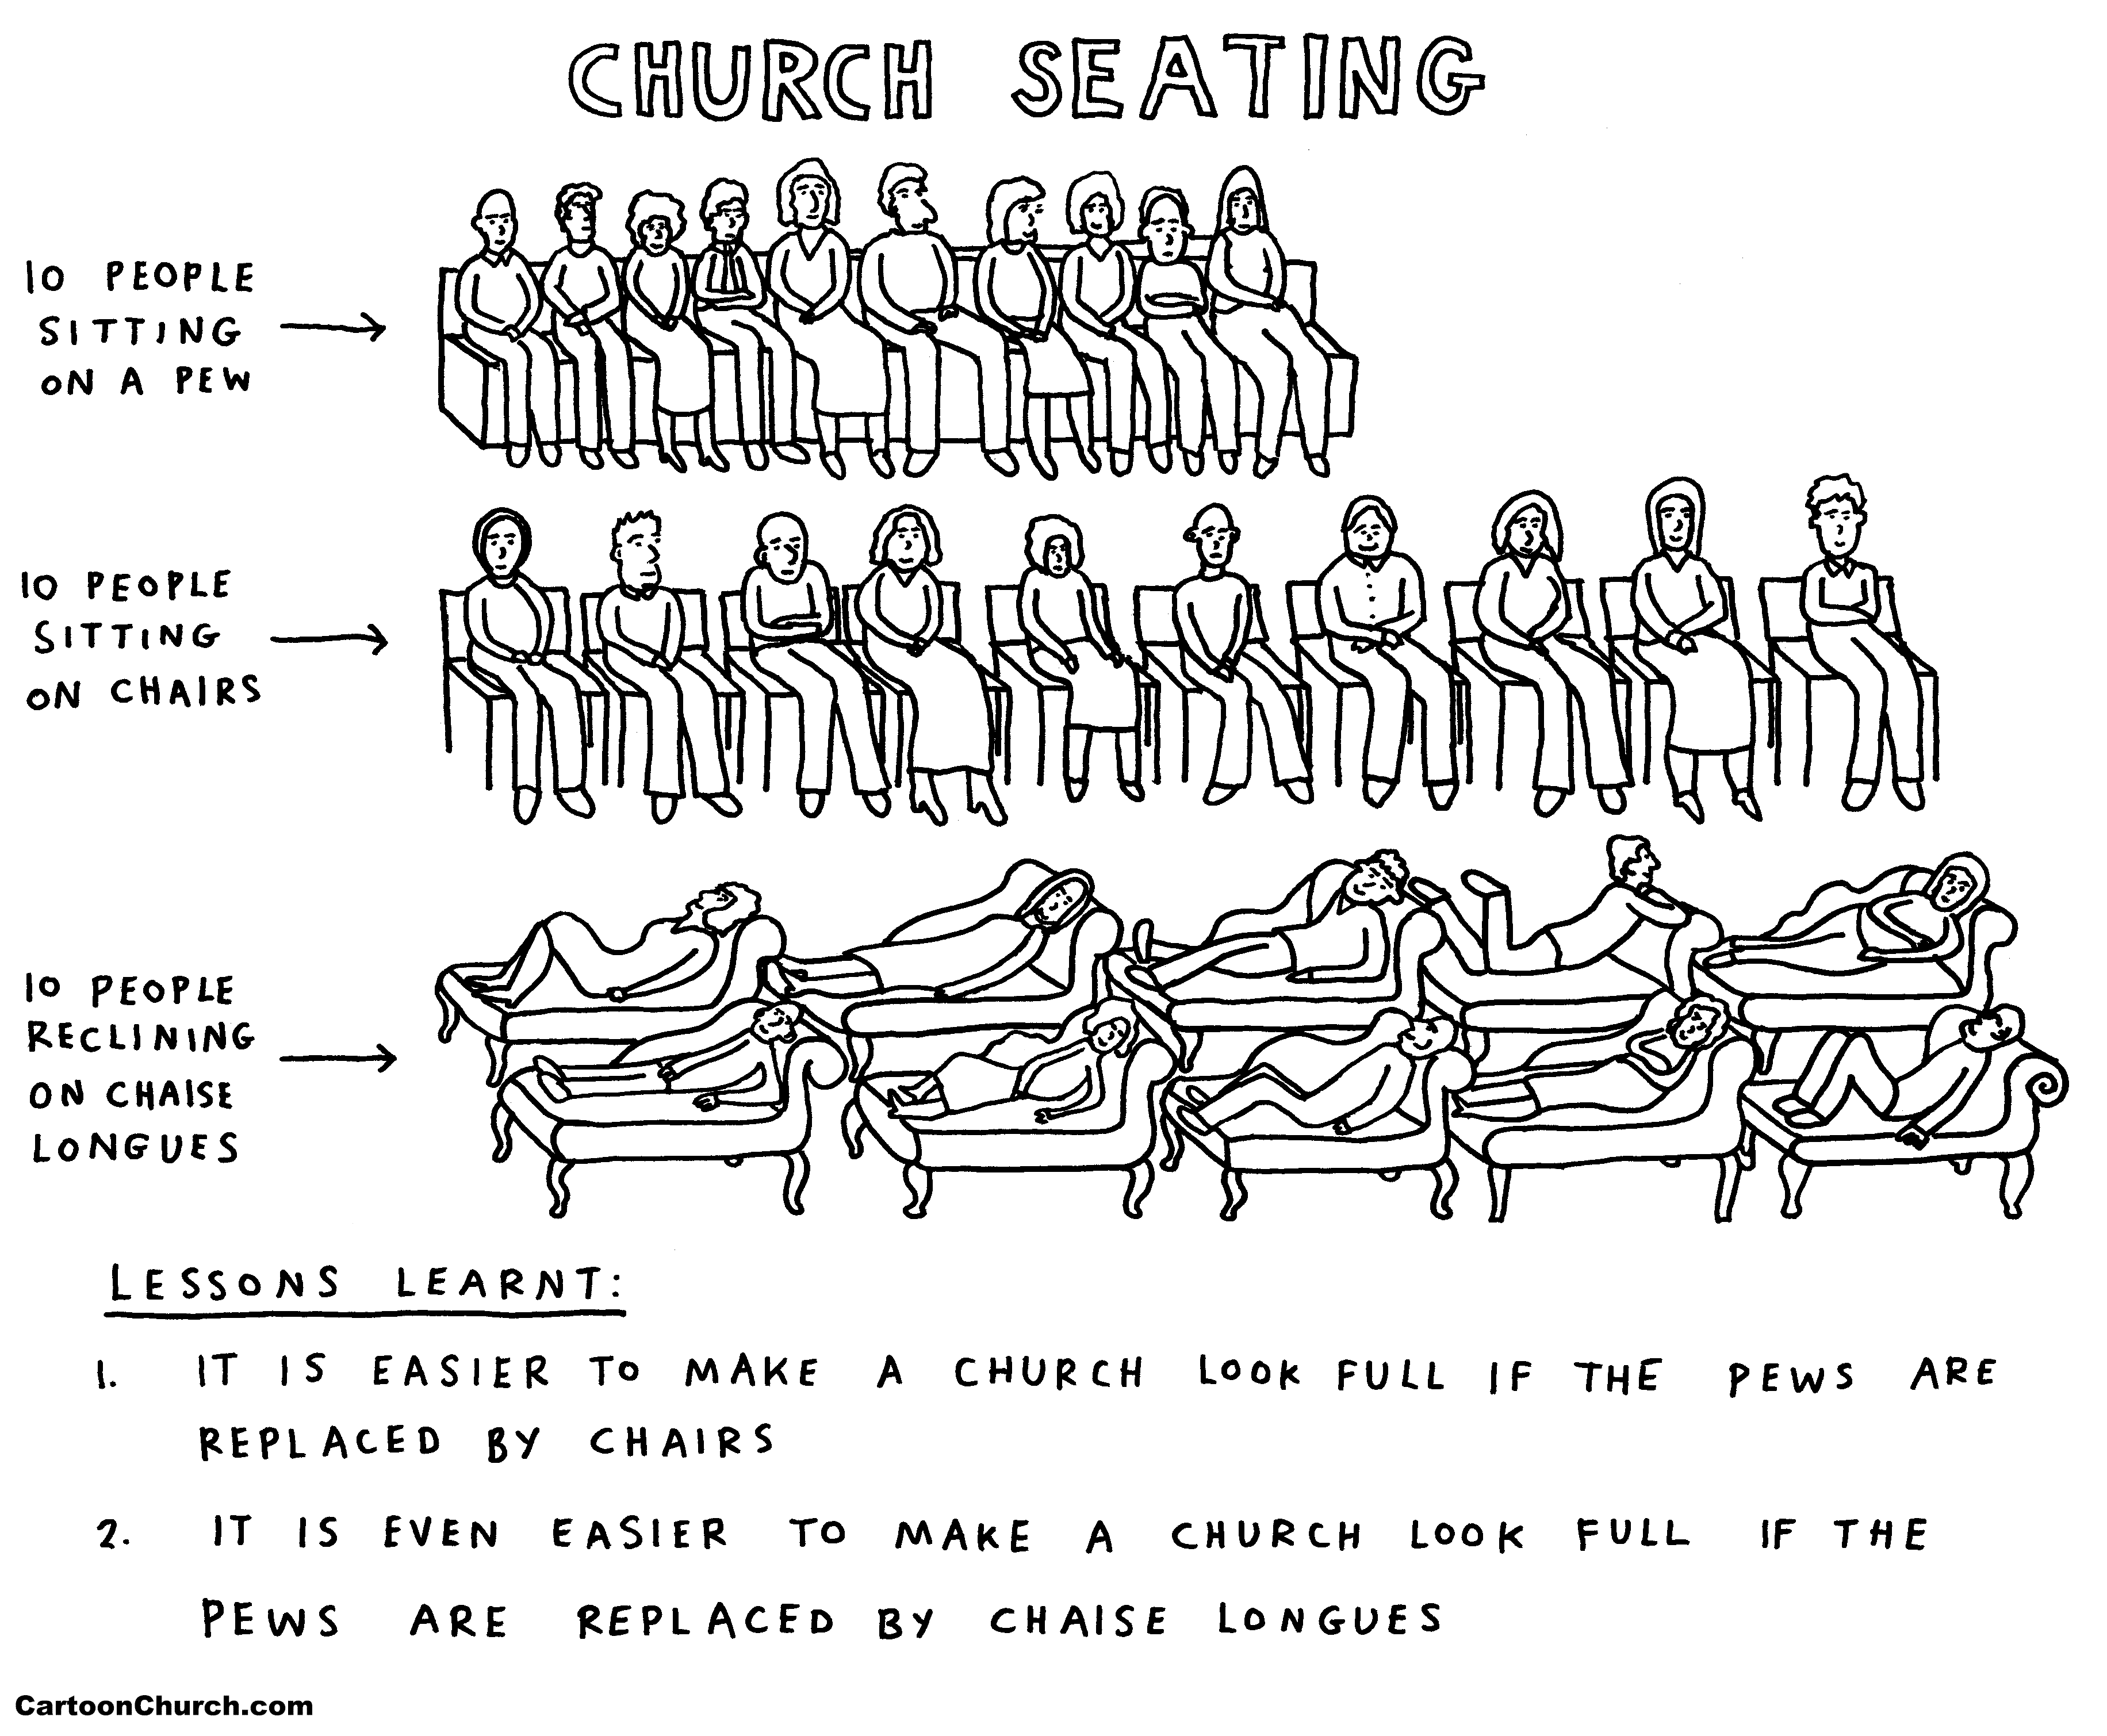 Church seating — CartoonChurch.com